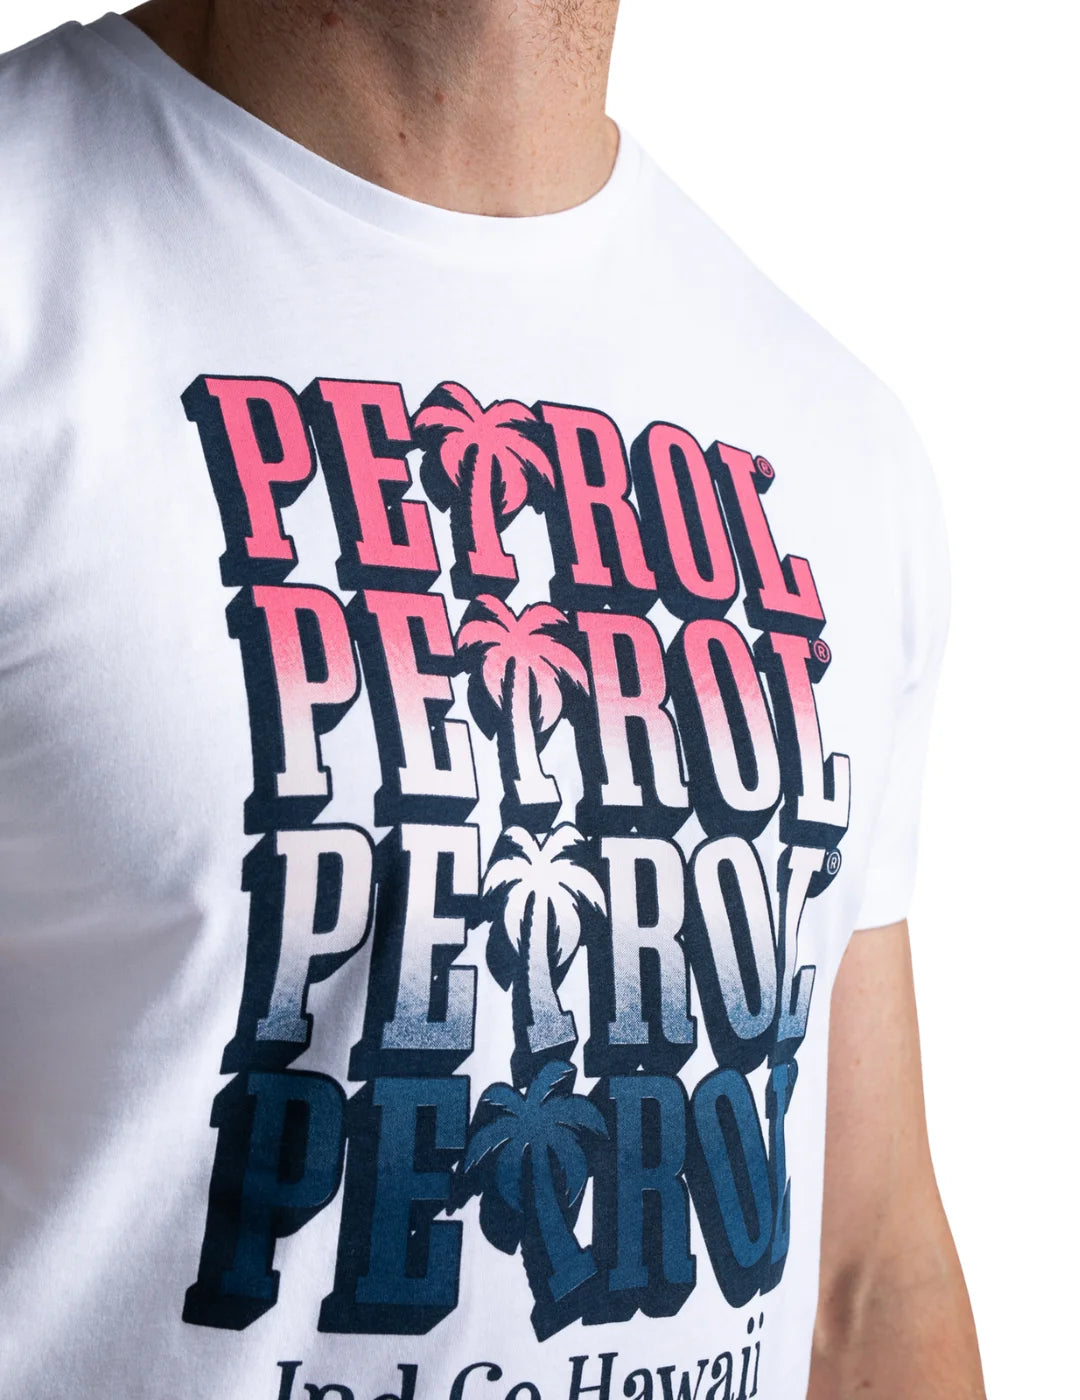 Camiseta Petrol Industries Radiance Blanco | Bicos de Fío